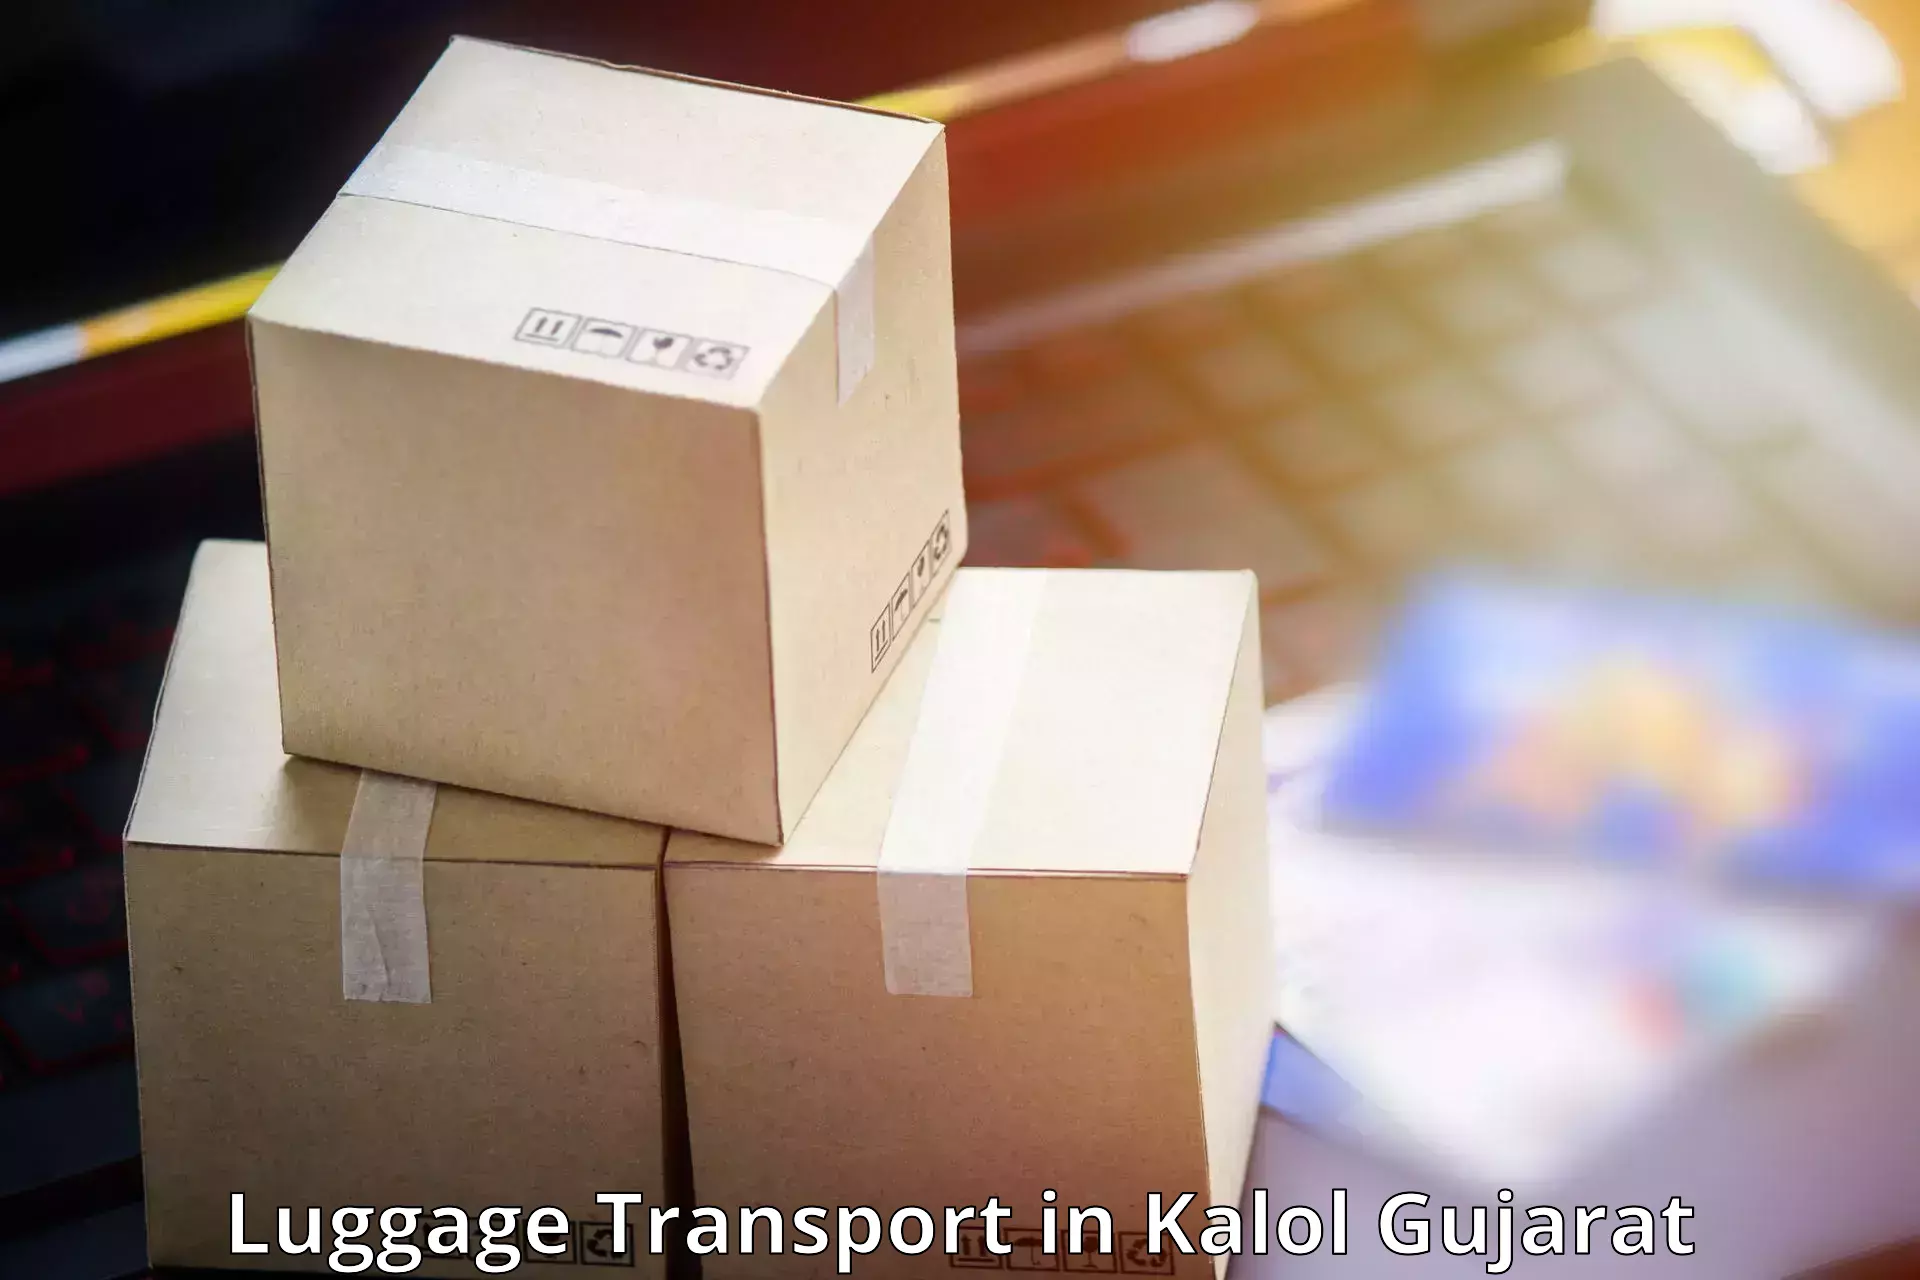 High-quality baggage shipment in Kalol Gujarat